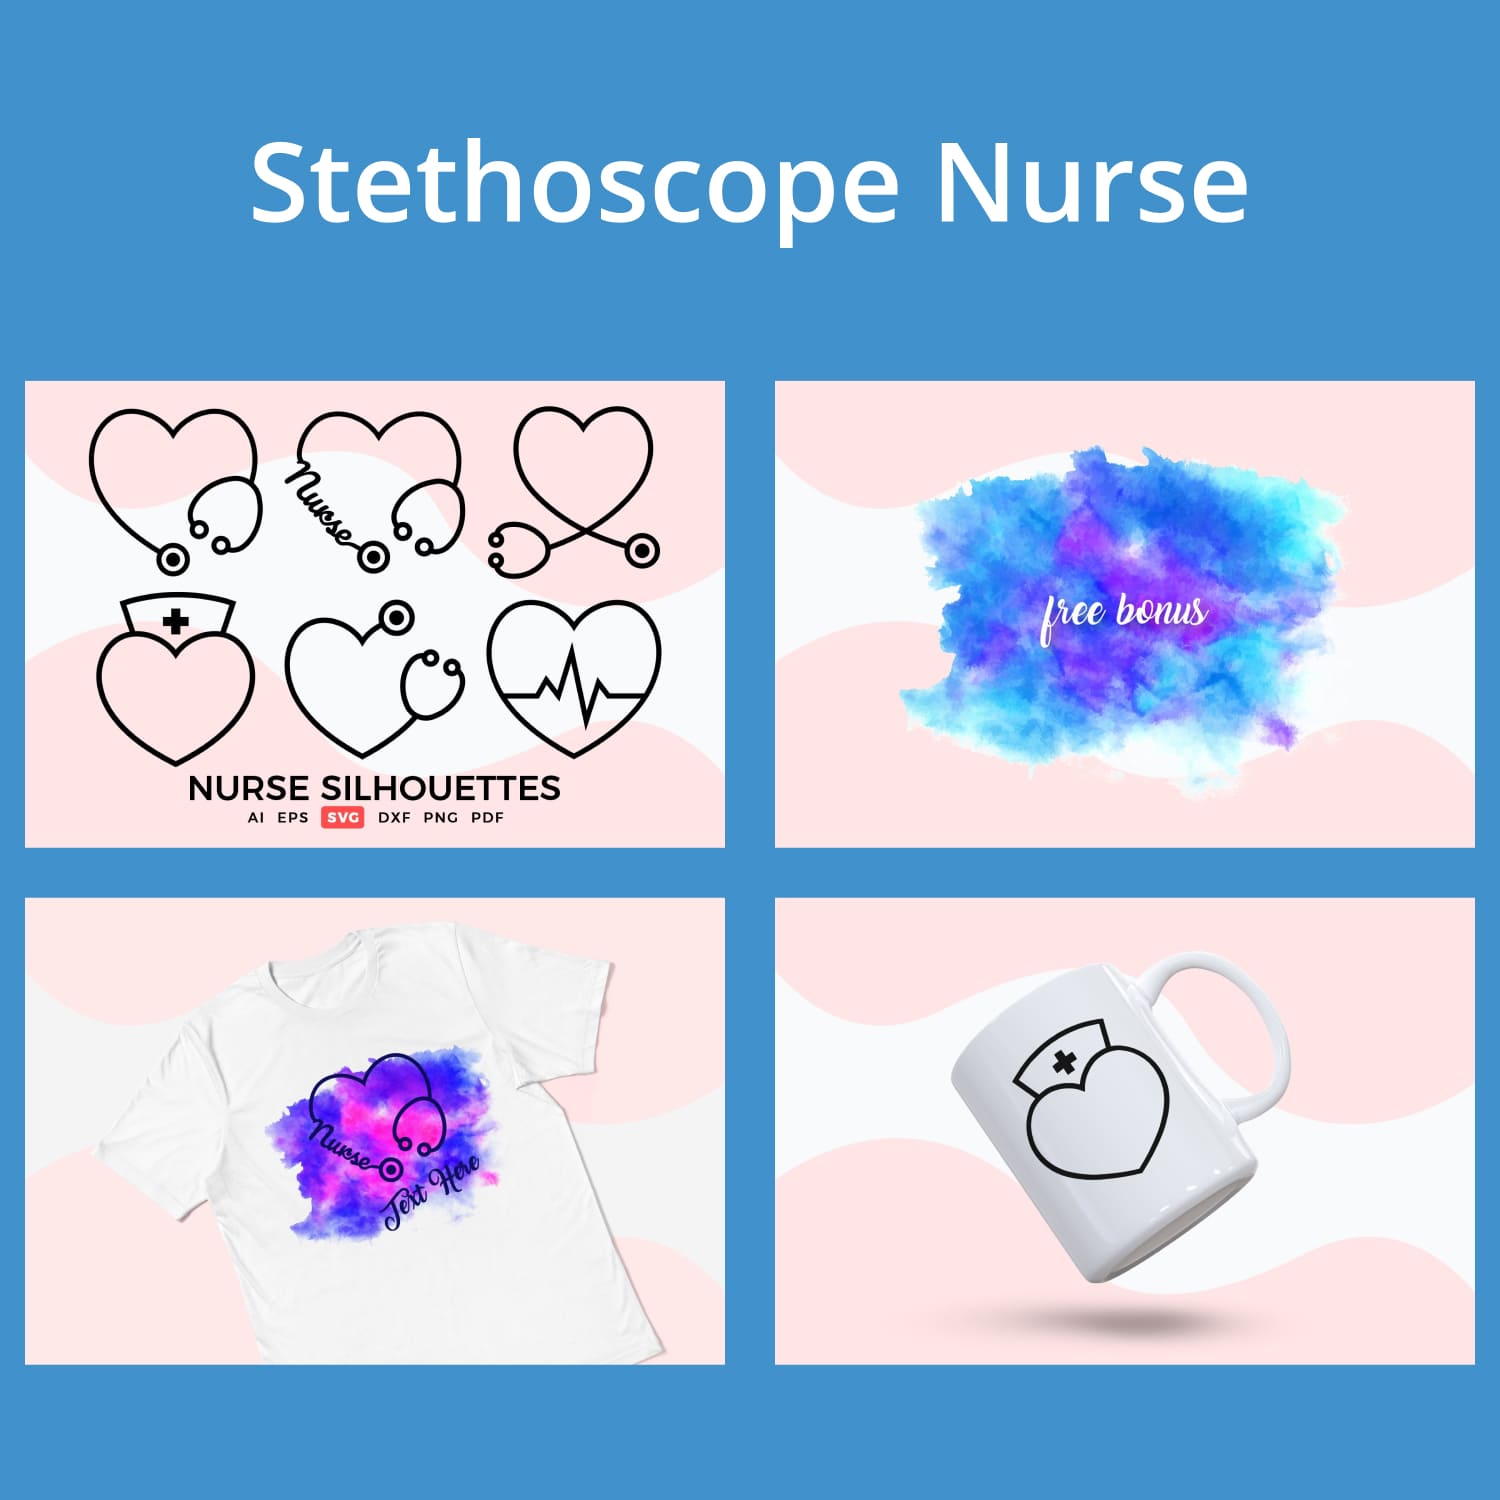 Nurse SVG - Stethoscope Nurse Silhouettes cover.